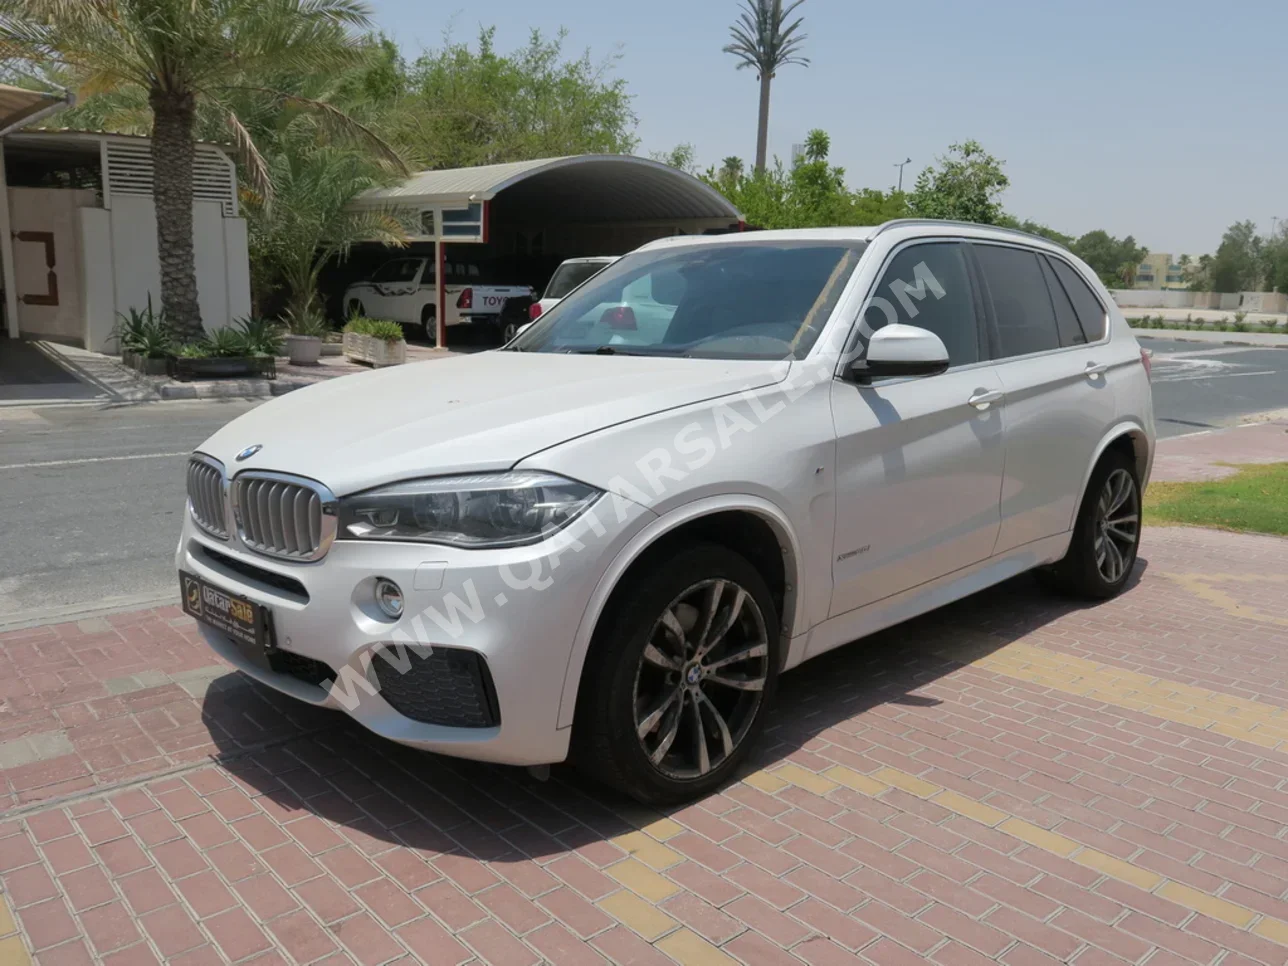 BMW  X-Series  X5  2015  Automatic  77,000 Km  8 Cylinder  Four Wheel Drive (4WD)  SUV  White